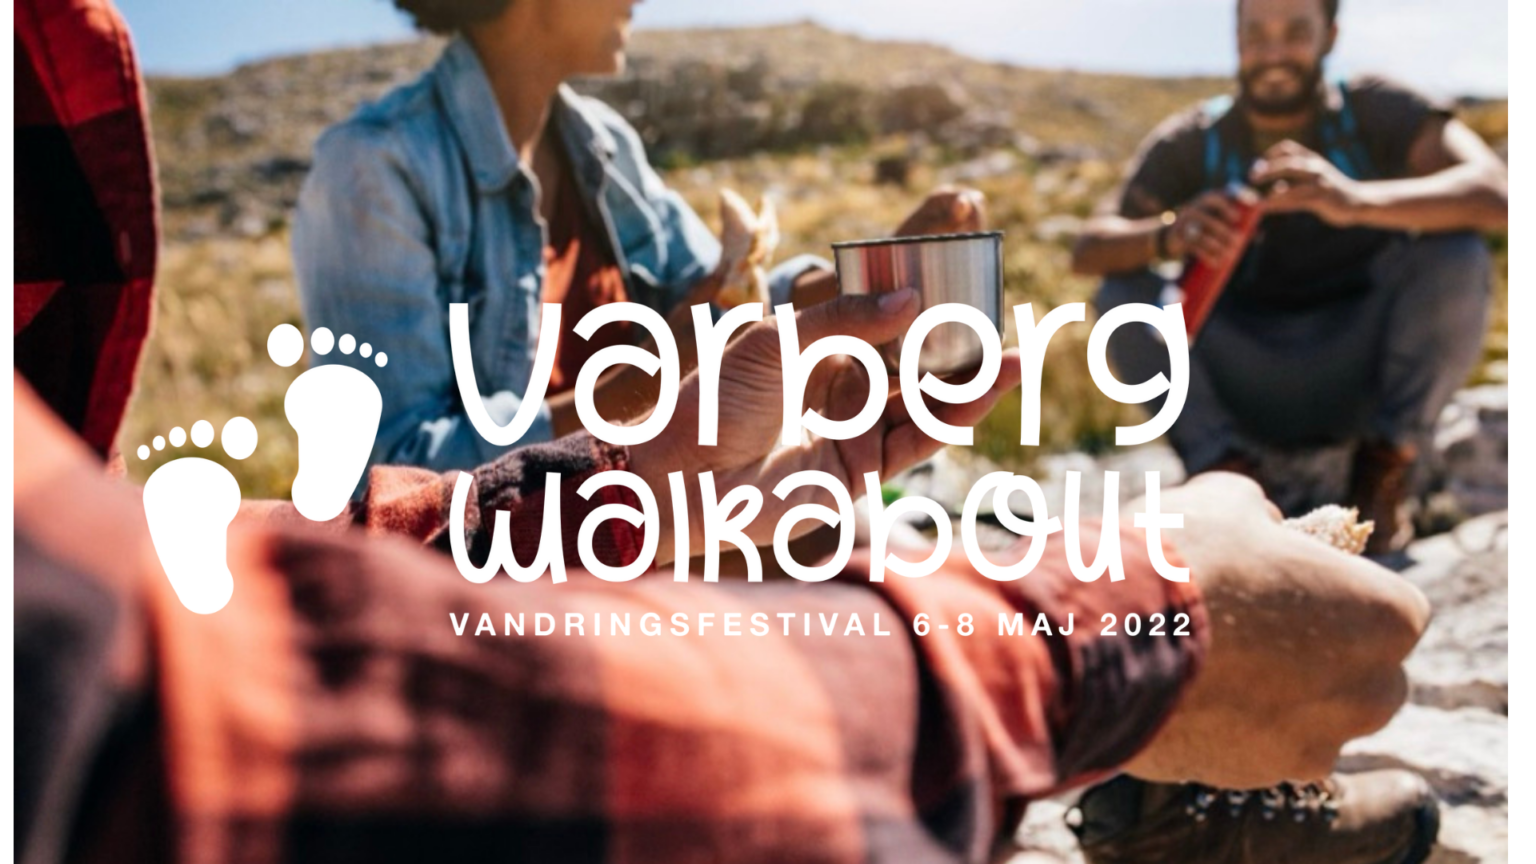 6-8 maj Varberg Walkabout